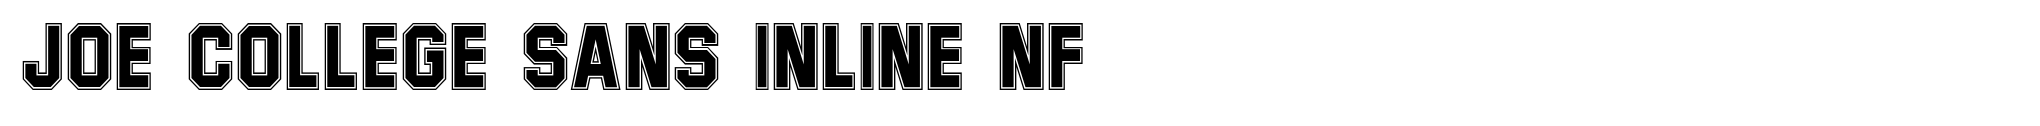 Joe College Sans Inline NF image